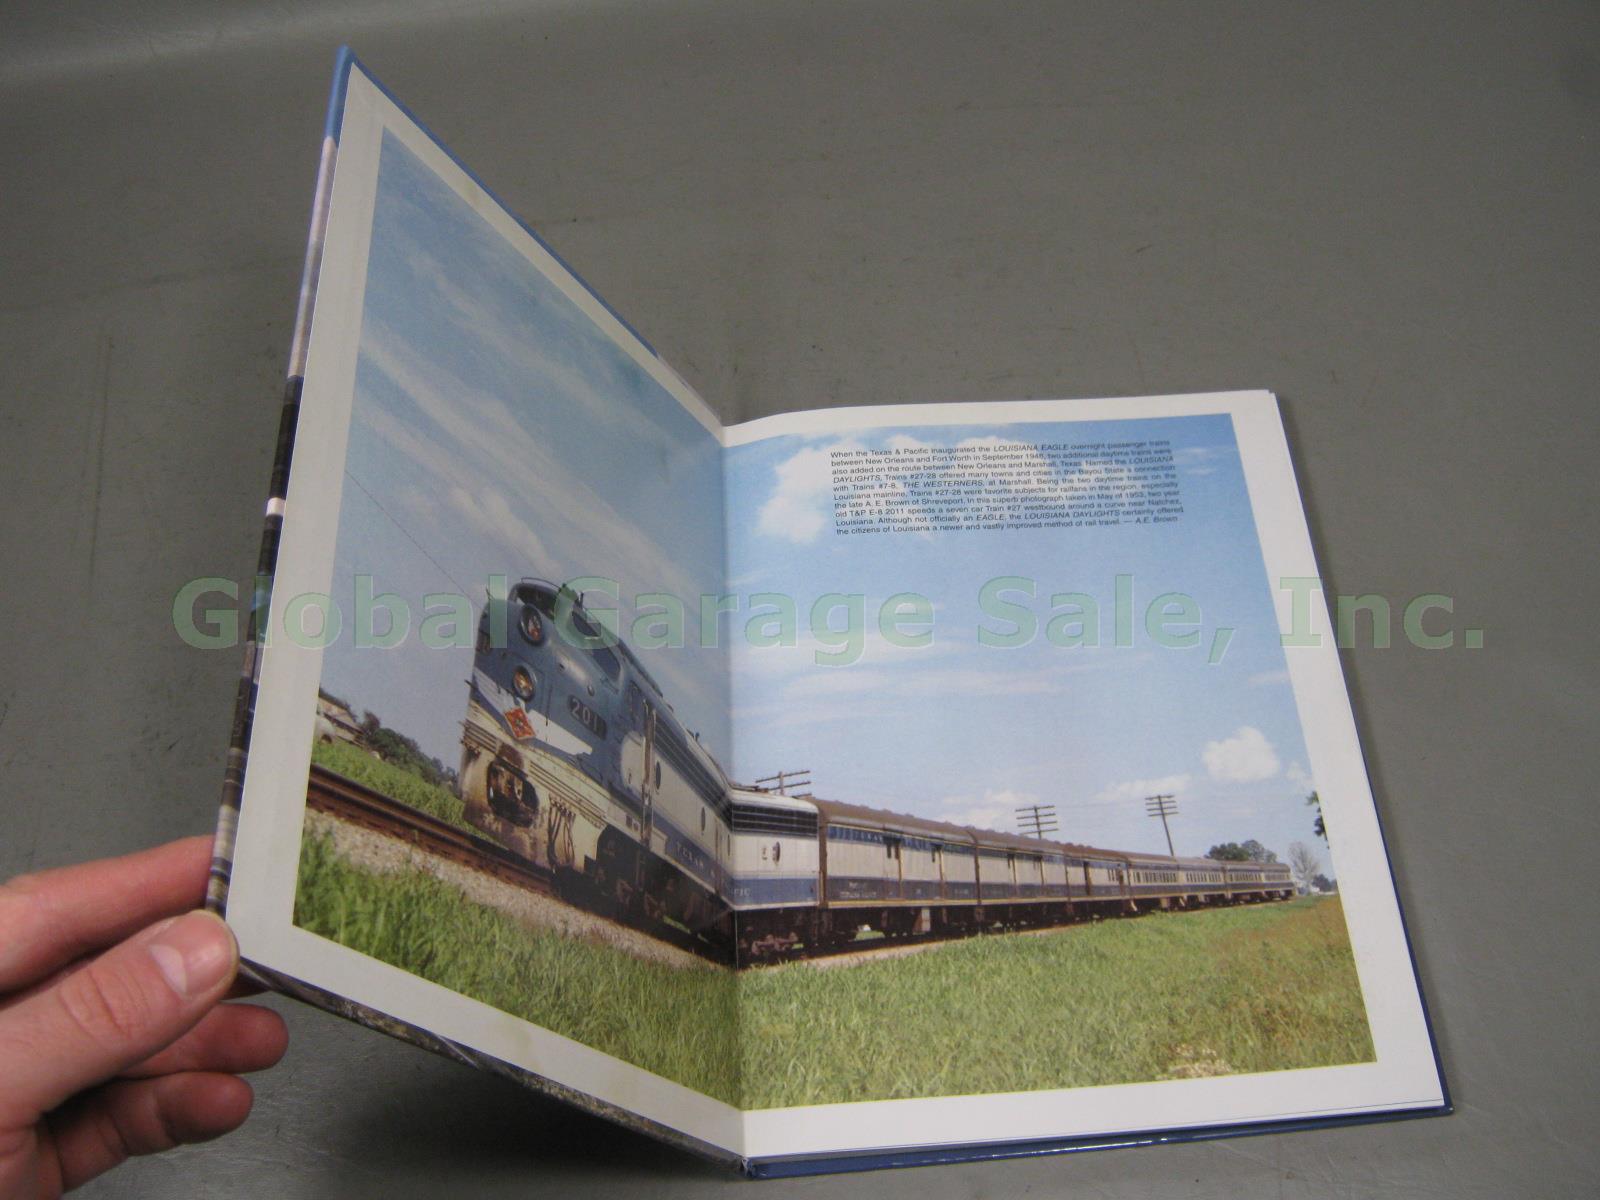 SIGNED Texas & Pacific Color Pictorial Railroad Train Book Steve Allen Goen 1997 1